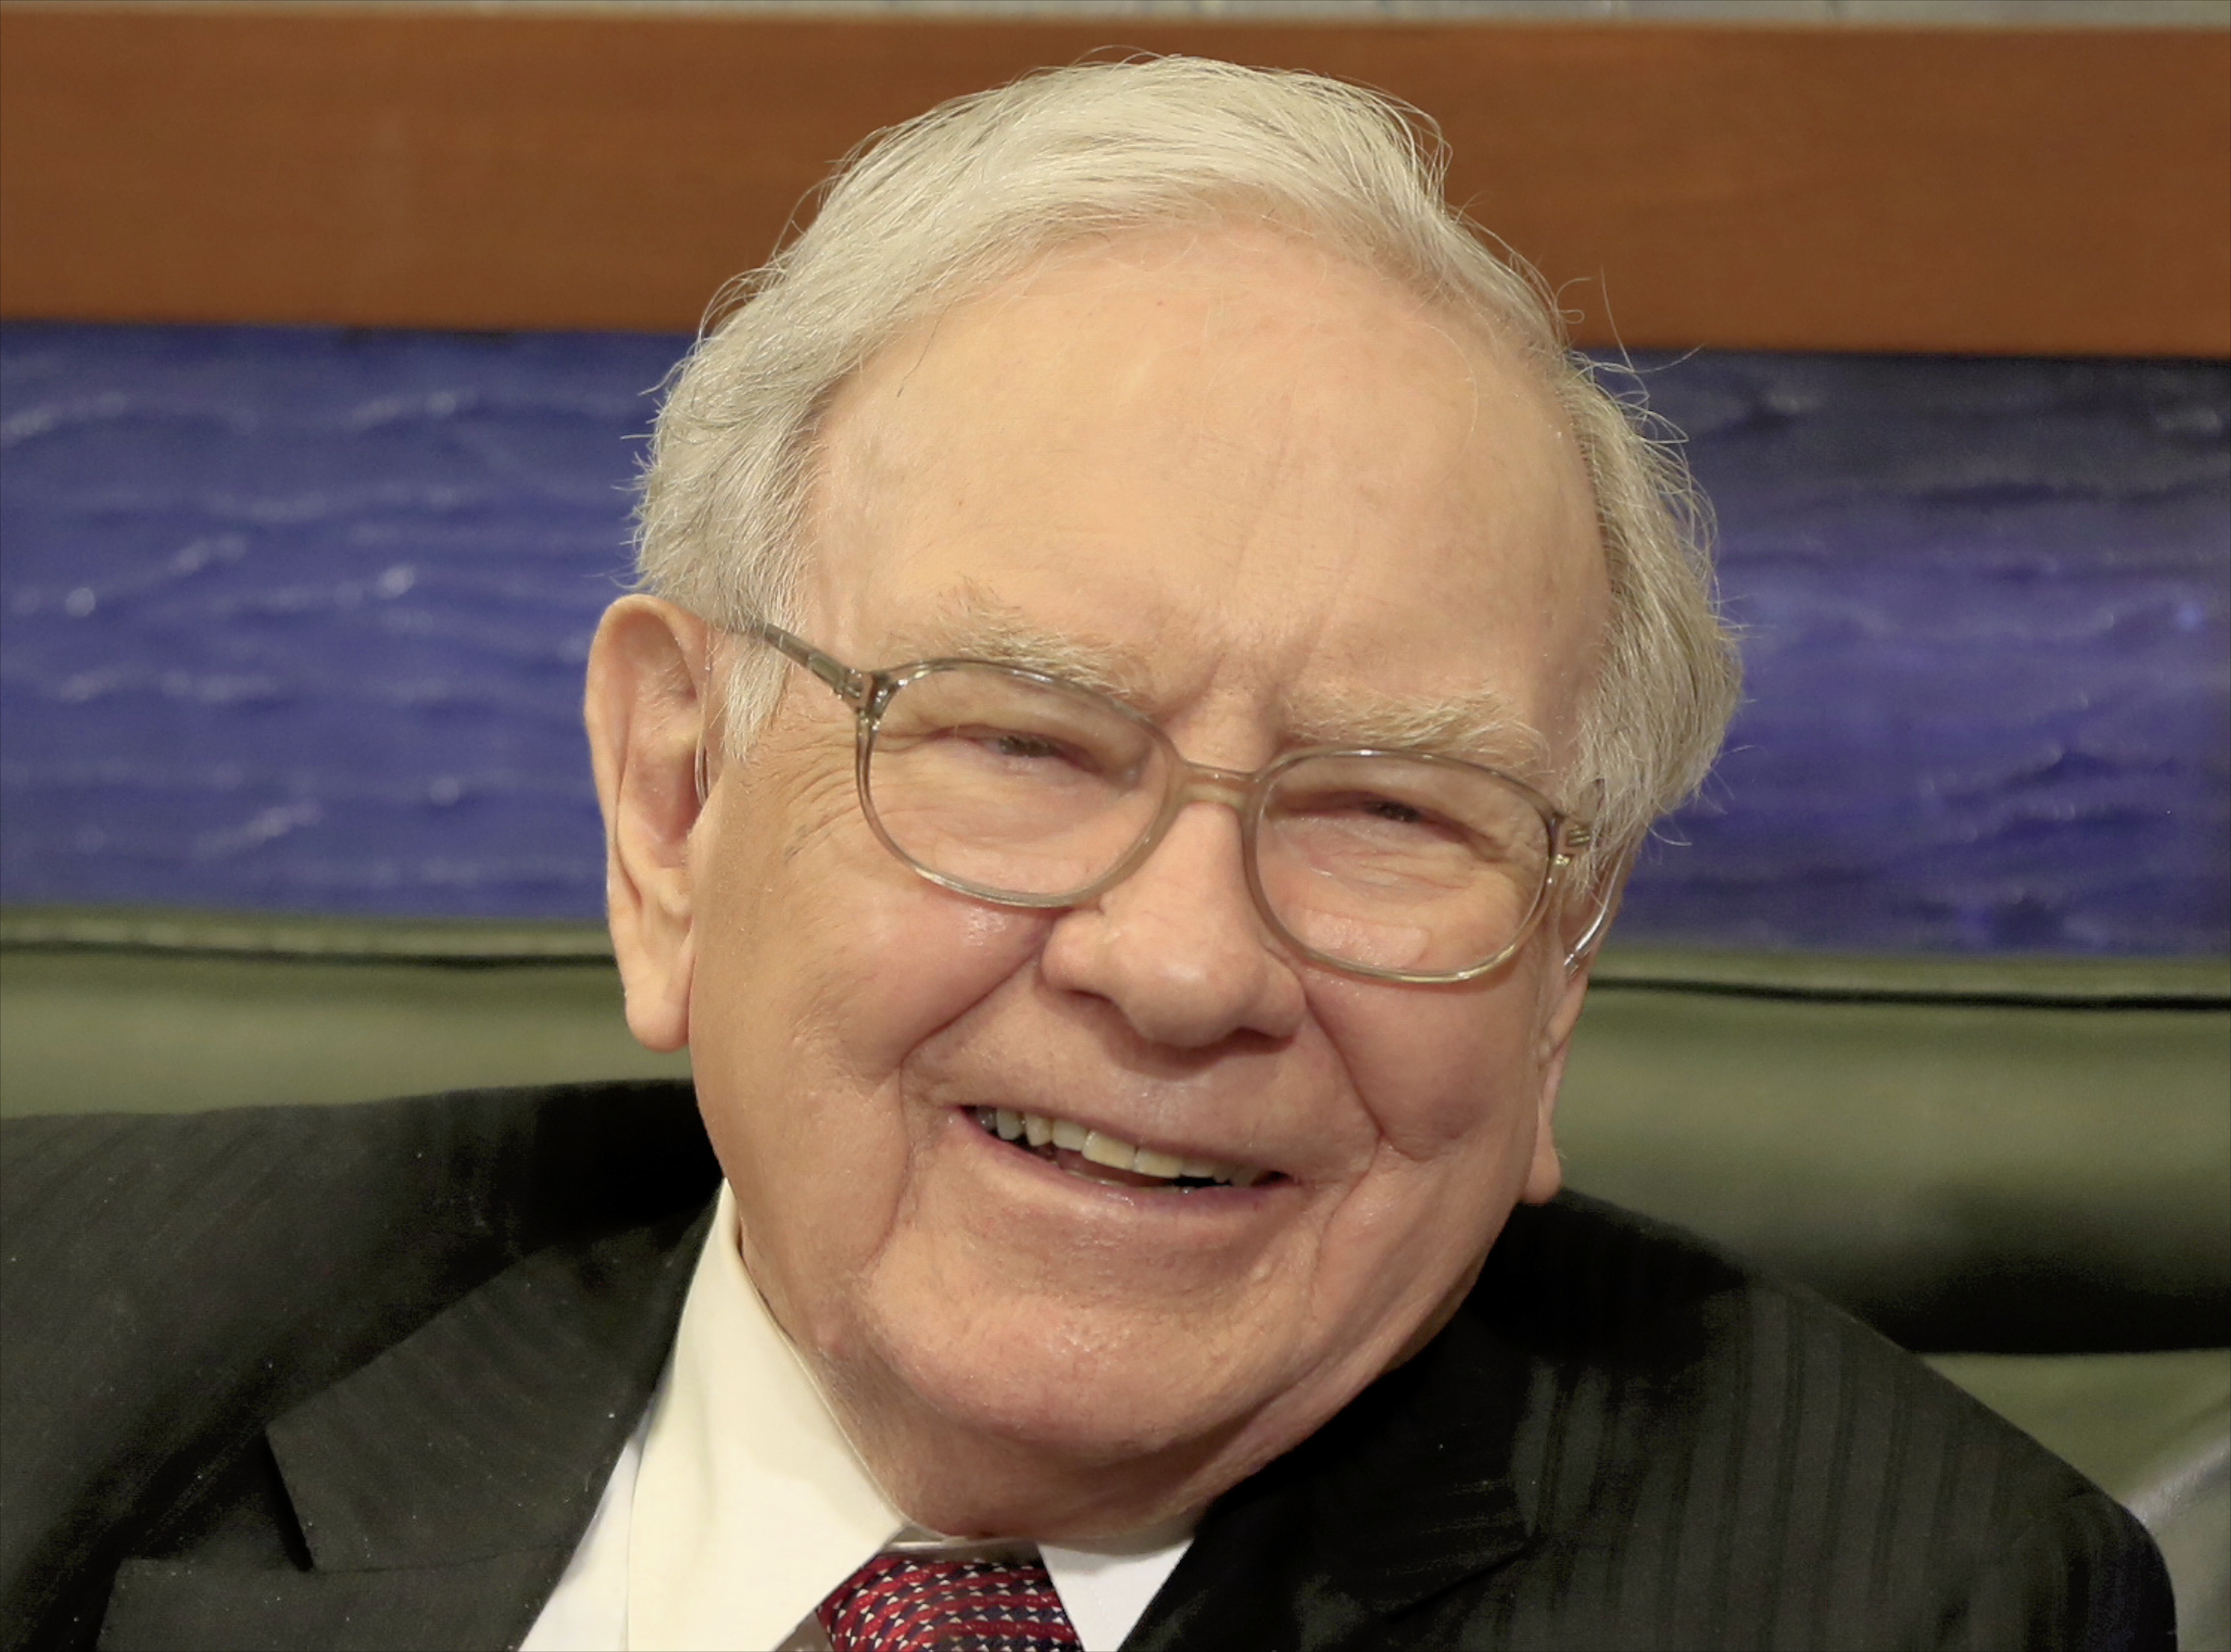 Warren Buffett during an interview in Omaham, Neb. on May 4, 2015.